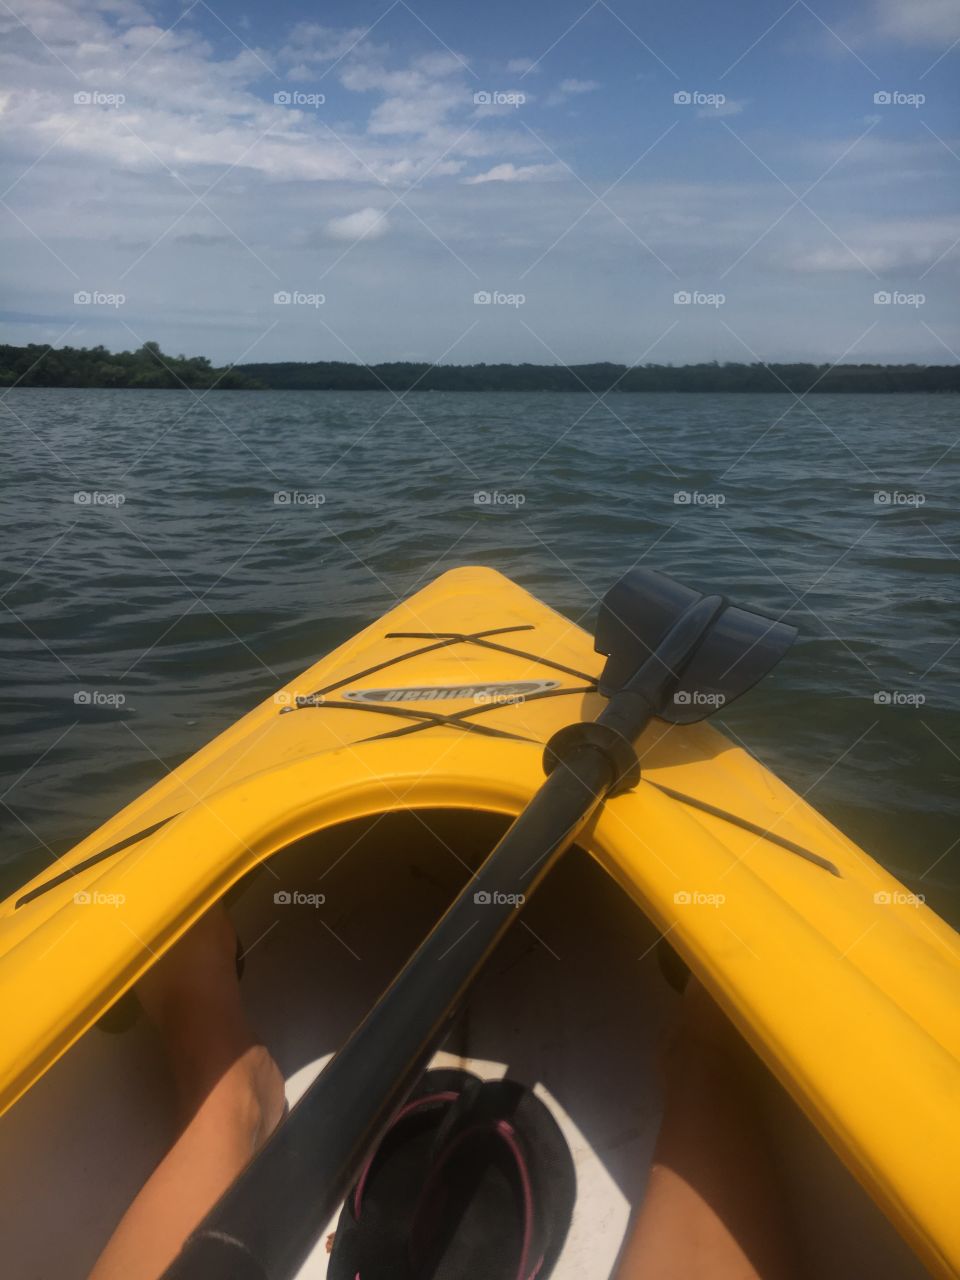 Kayaking a big, dark lake with a yellow kayak, oar is visible